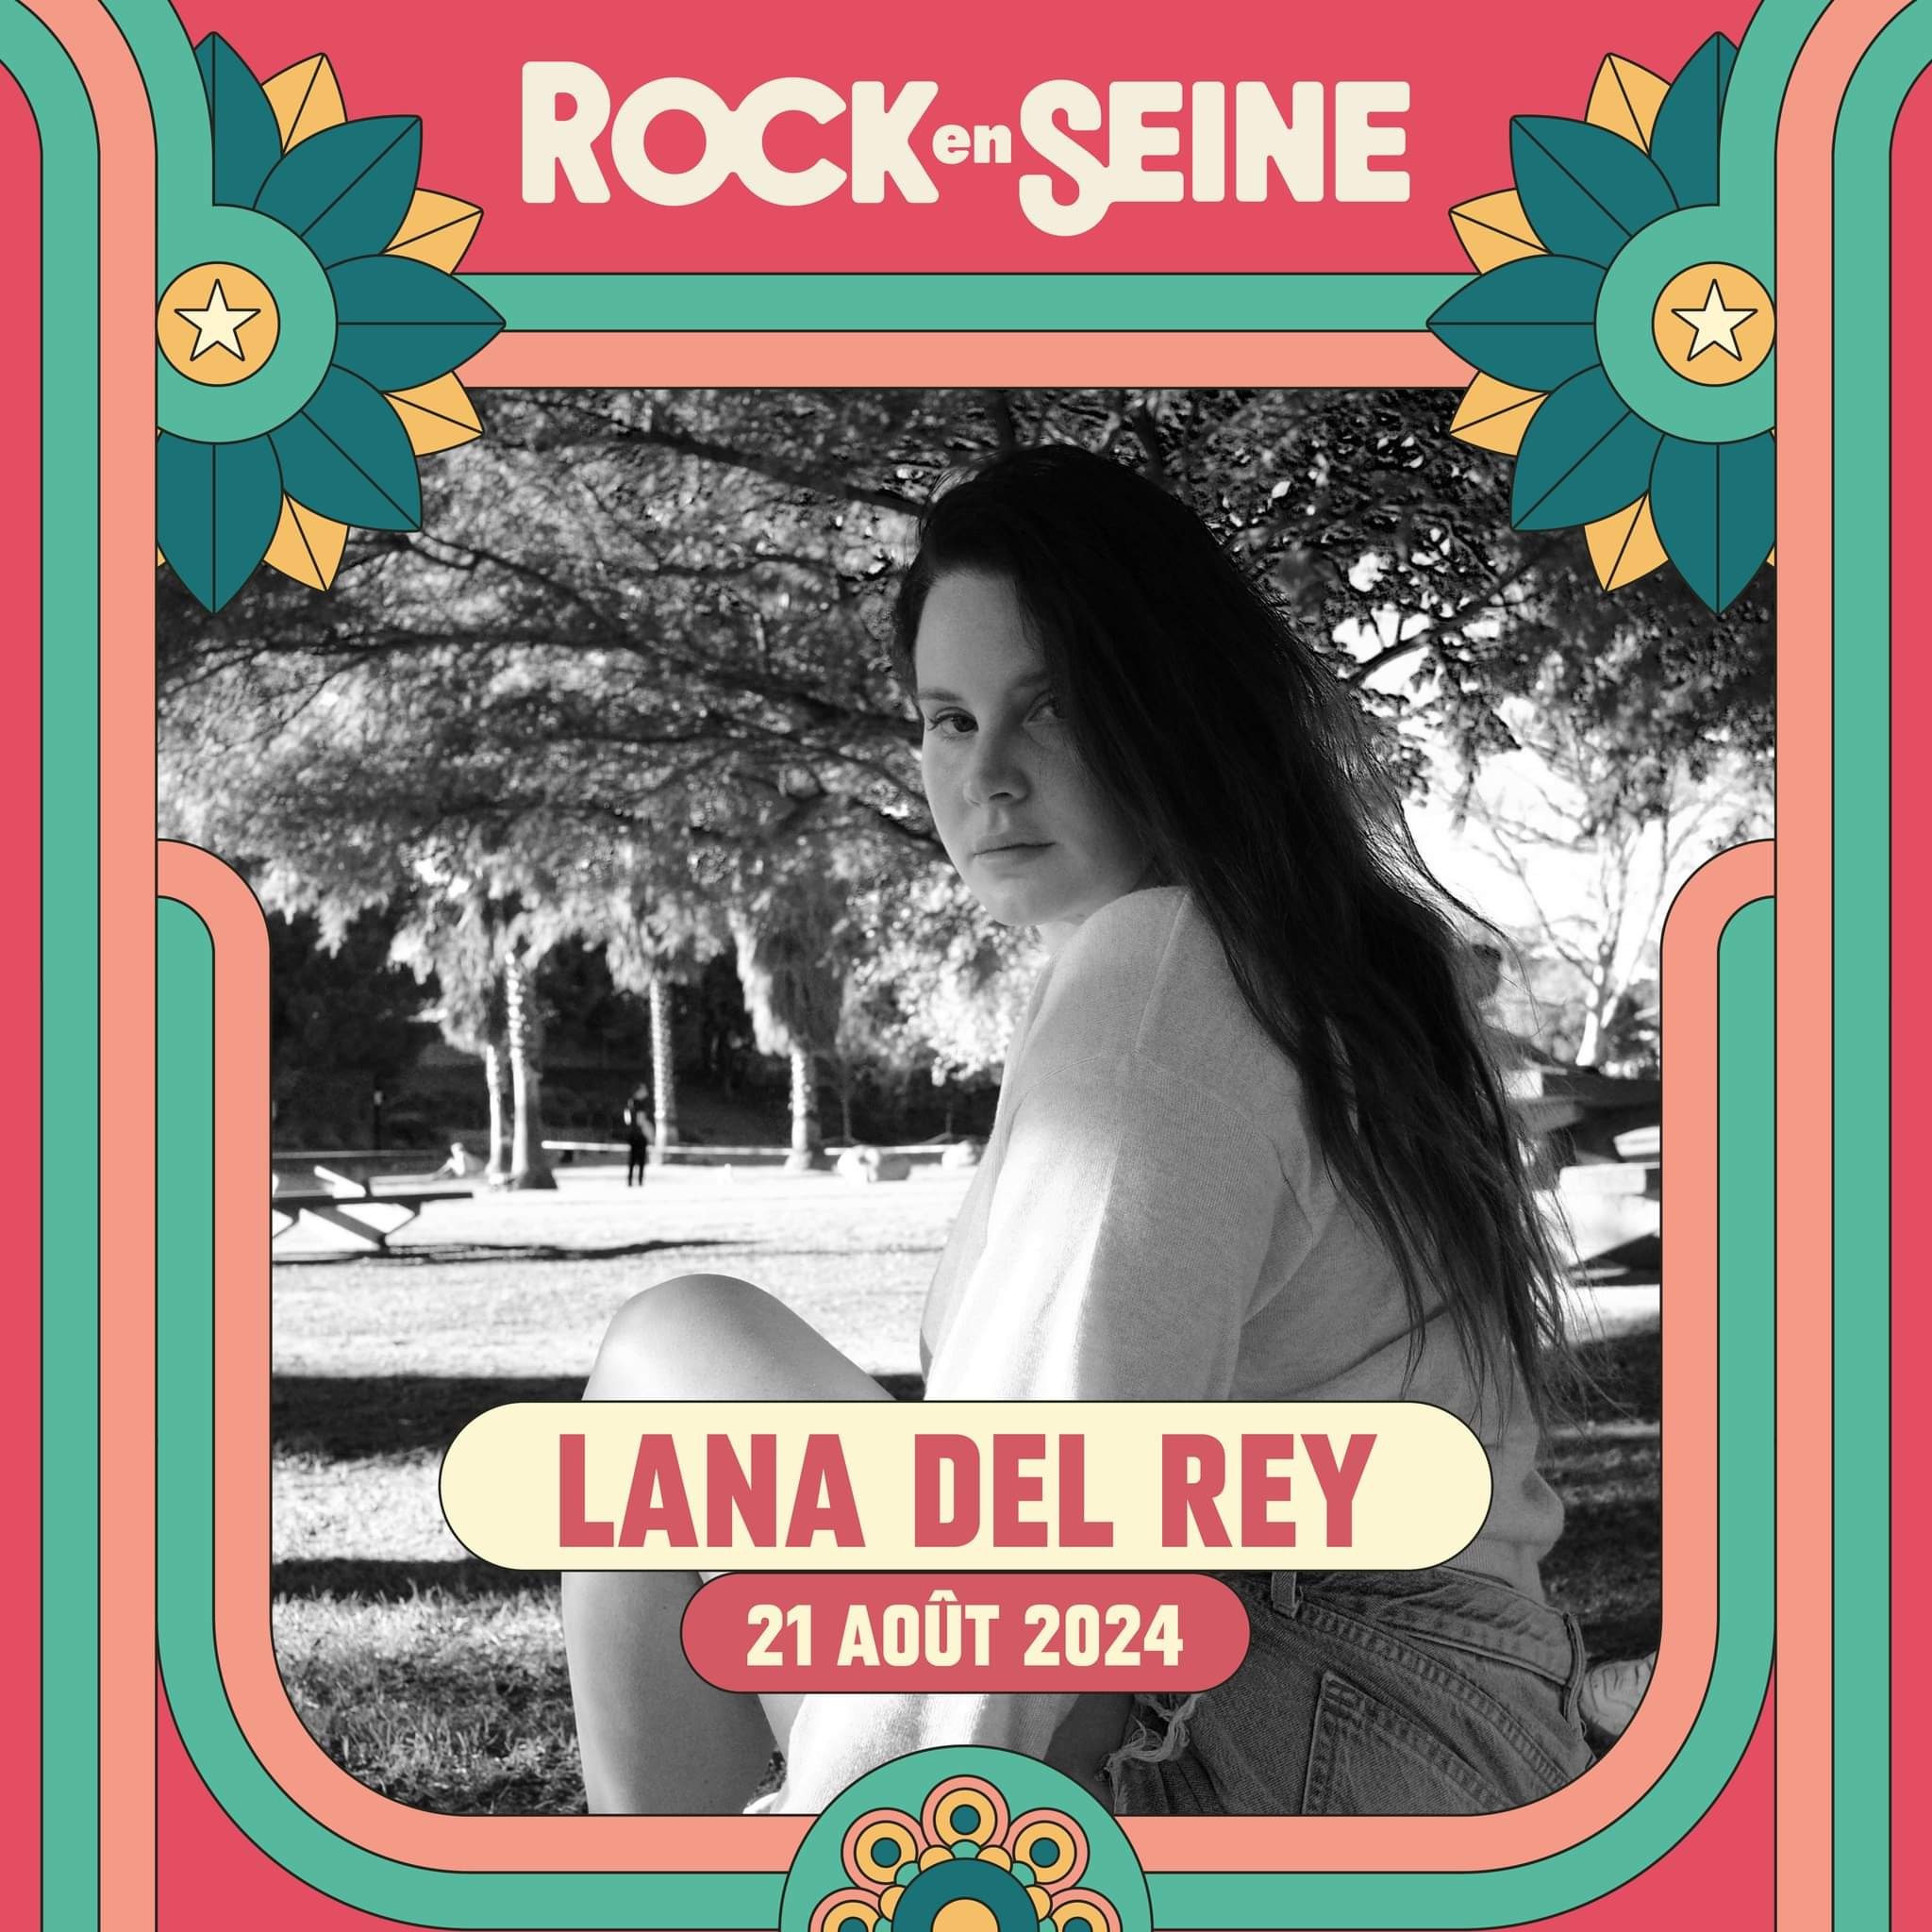 Rock en Seine 2024 : Lana Del Rey al Domaine national de Saint-Cloud Tickets